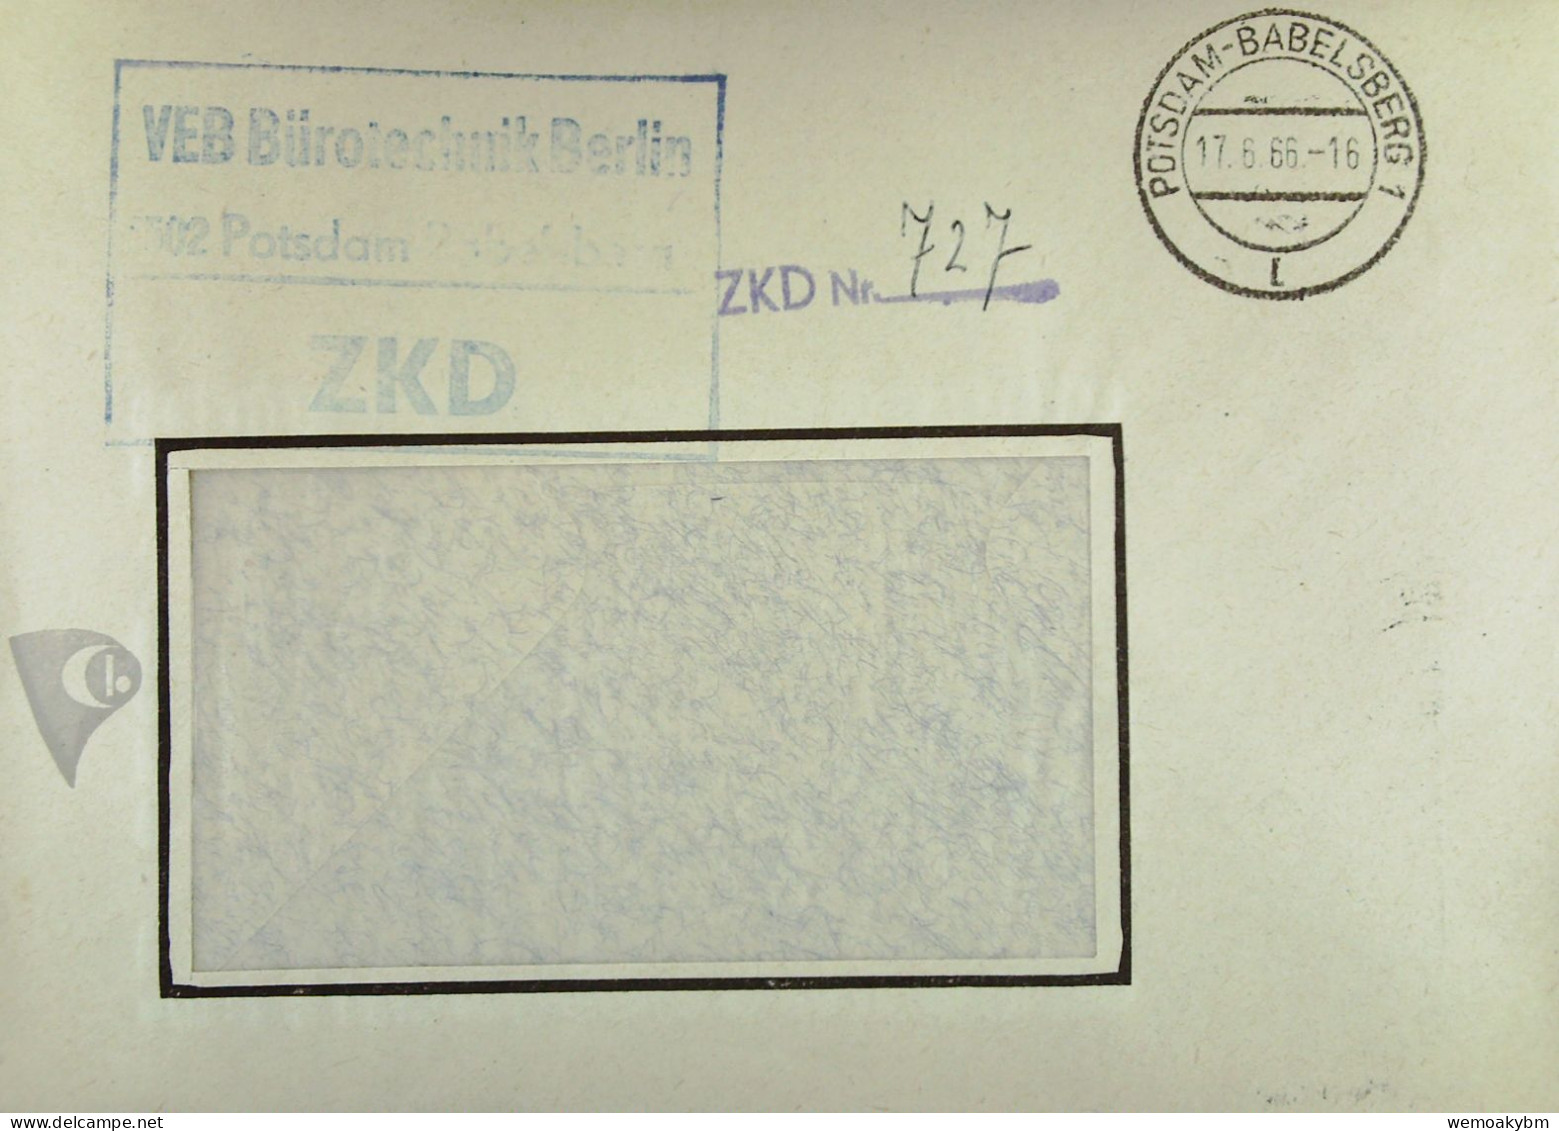 DDR-ZKD-Brief Mit Kastenstempel "VEB Bürotechnik Berlin 1502 Potsdam-Babelsberg" V. 17.6.66  ZKD-Nr. 727 Fensterumschlag - Covers & Documents